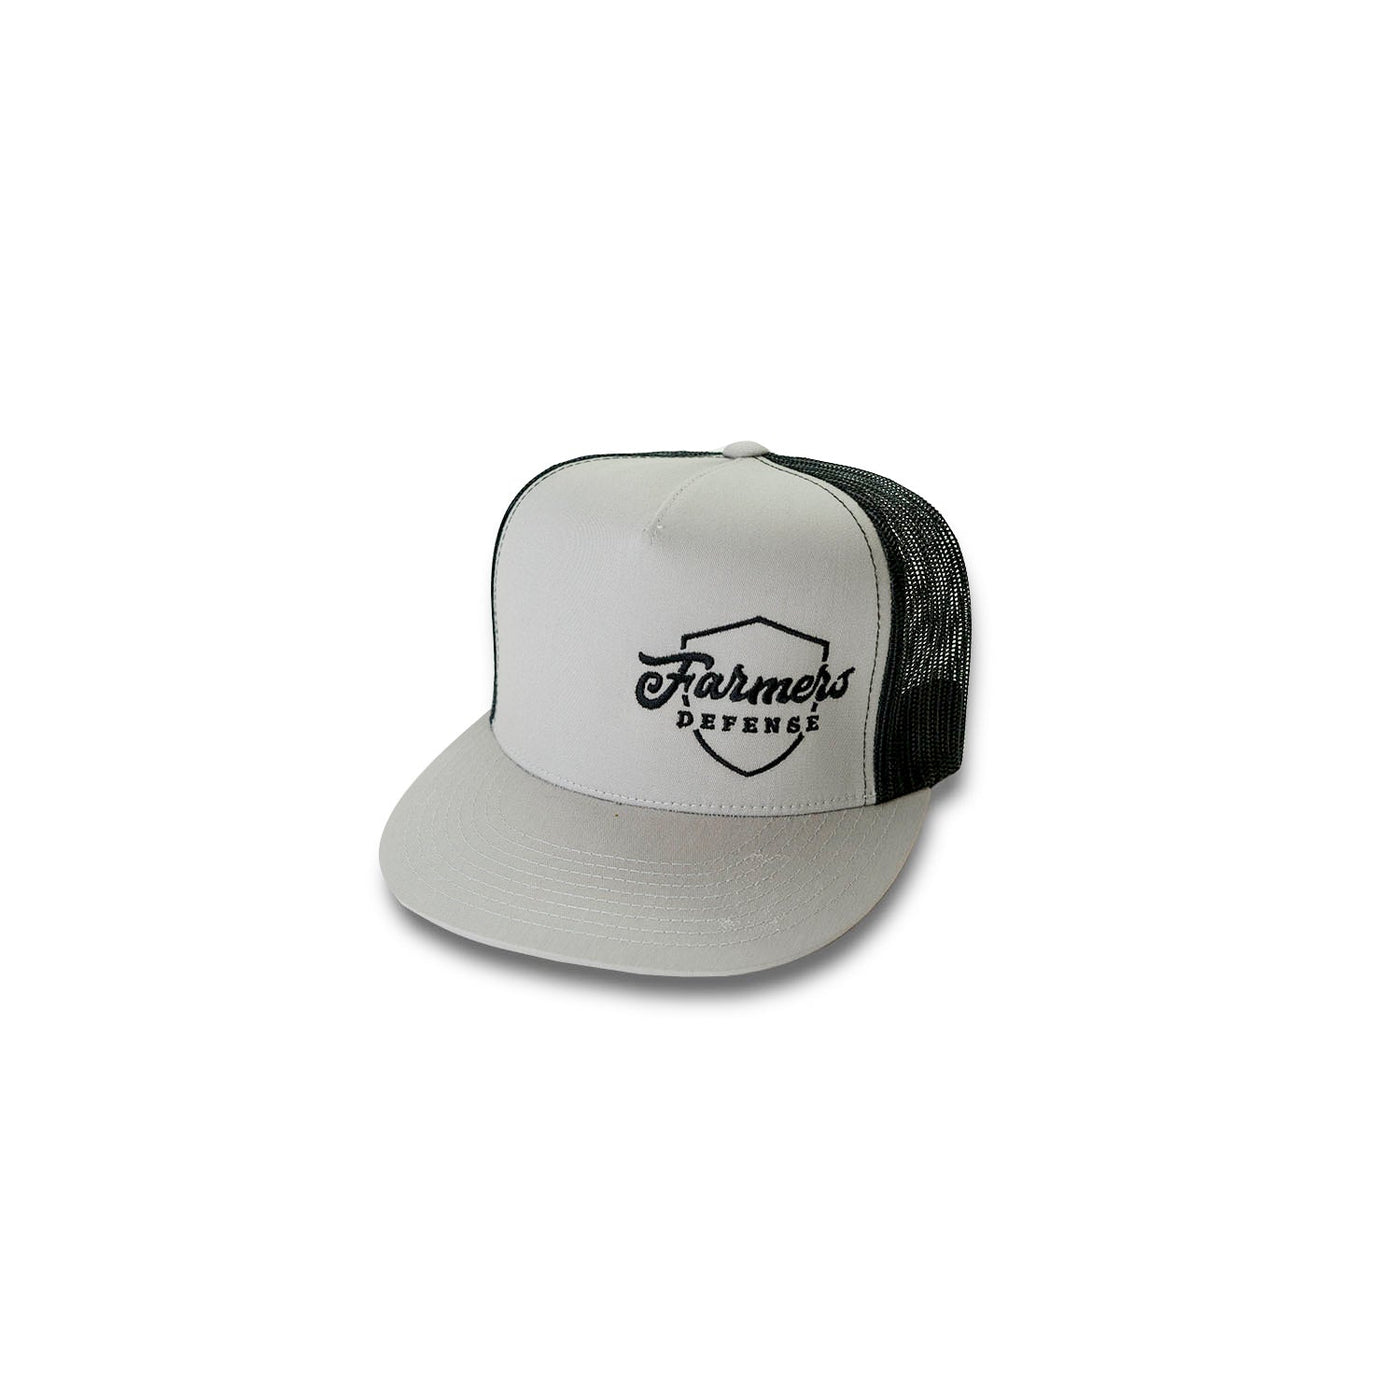 Farmers Defense Trucker Hat -Embroidered Shield Logo - Light Grey on Black